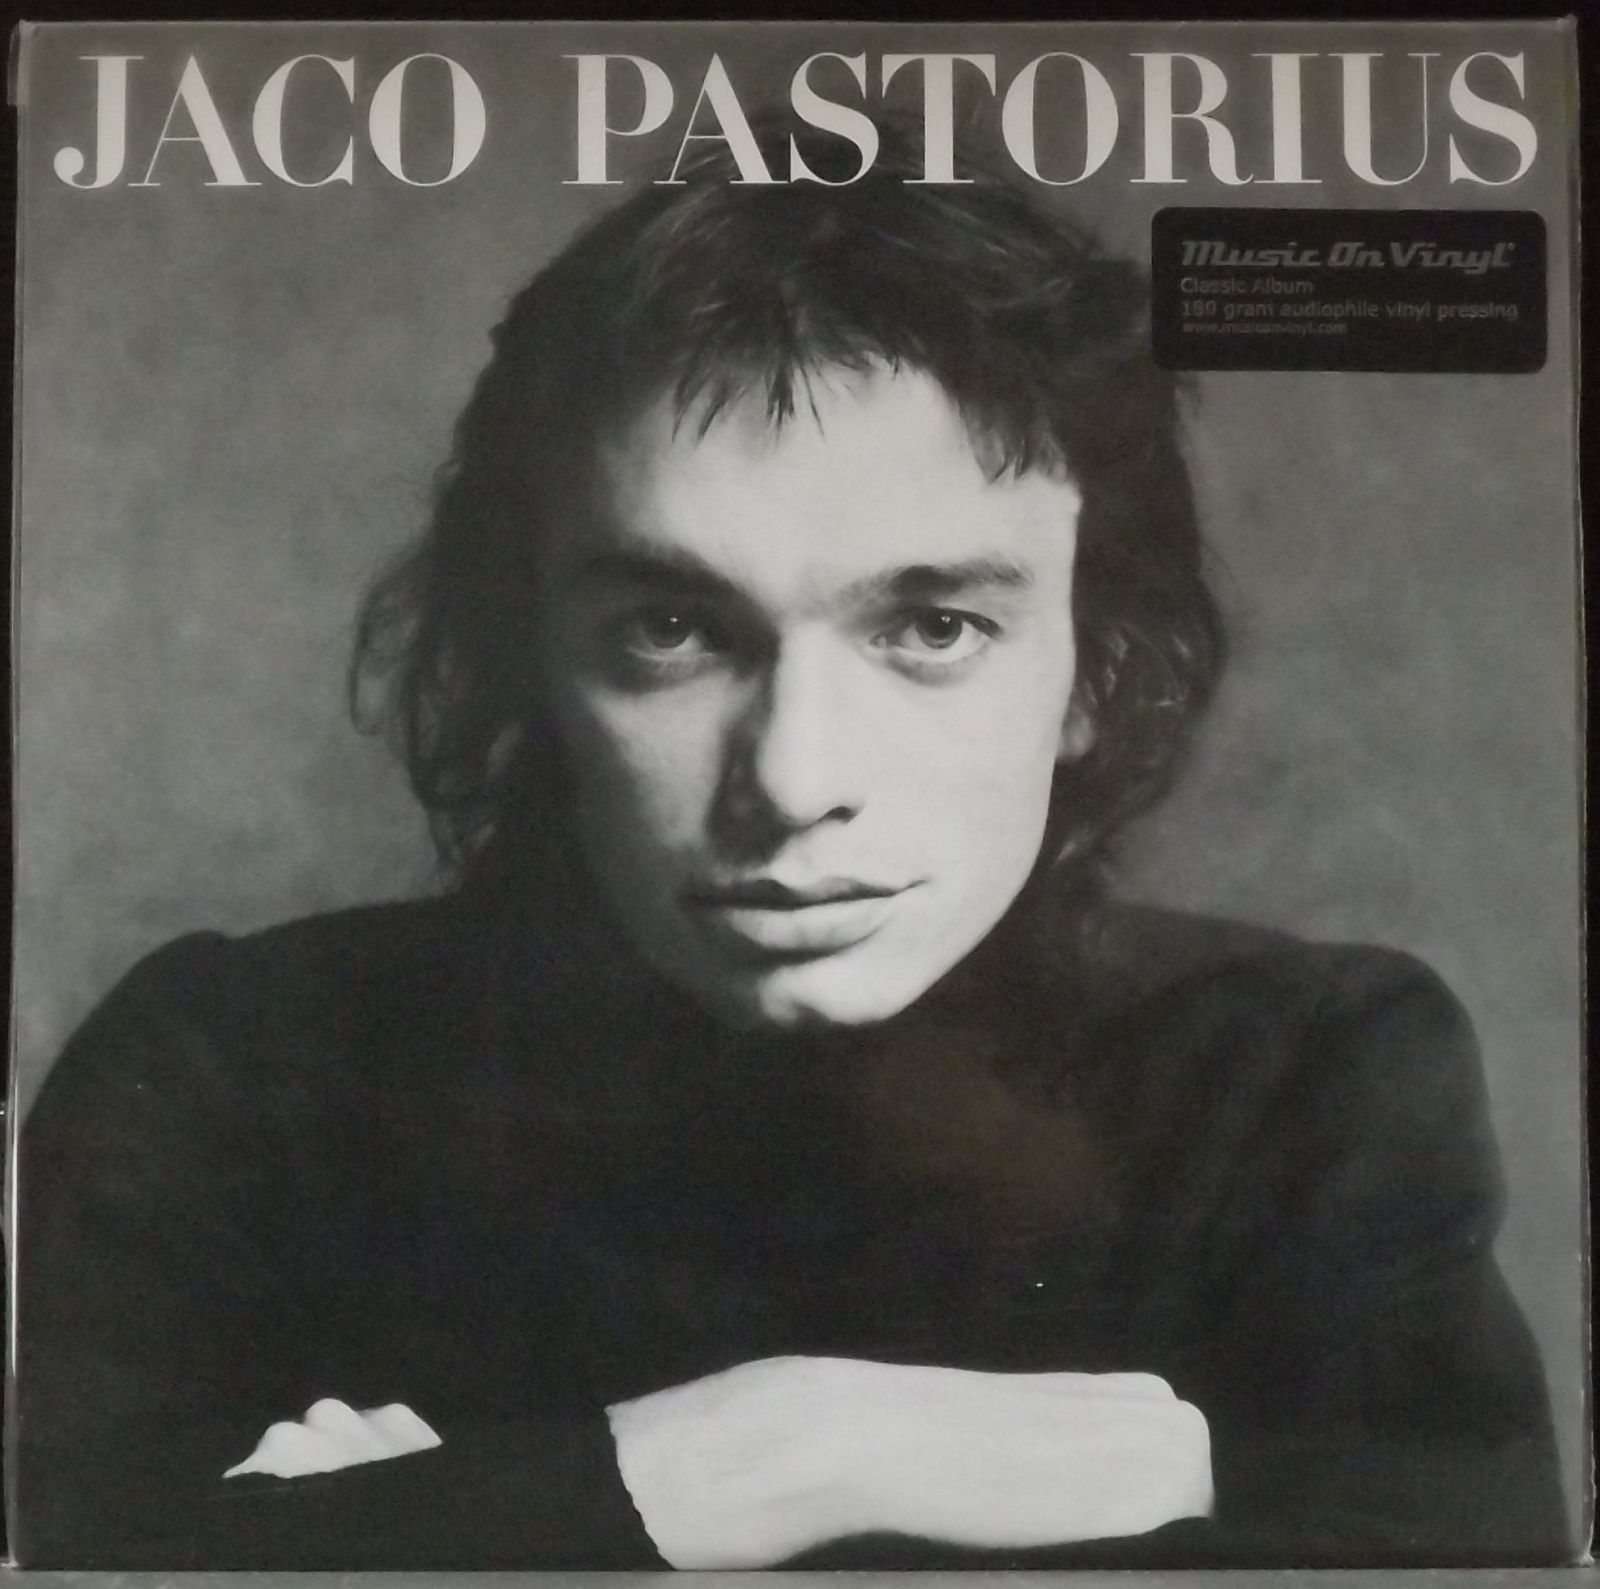 Виниловая пластинка Pastorius, Jaco, Jaco Pastorius (8713748980467) виниловая пластинка jaco pastorius word of mouth lp